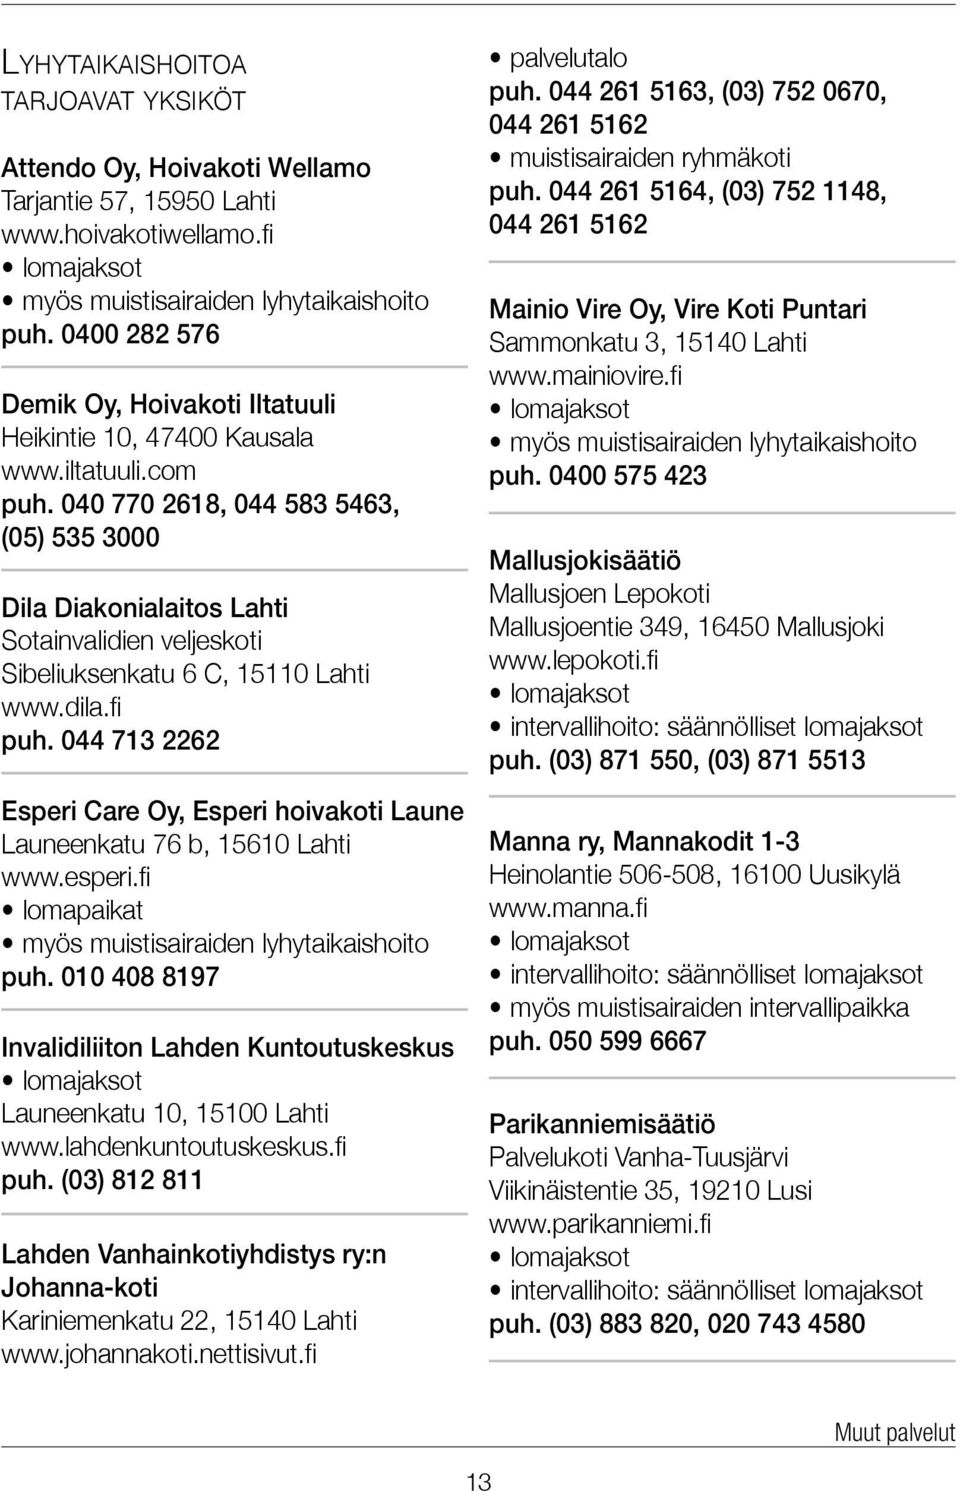 040 770 2618, 044 583 5463, (05) 535 3000 Dila Diakonialaitos Lahti Sotainvalidien veljeskoti Sibeliuksenkatu 6 C, 15110 Lahti www.dila.fi puh.